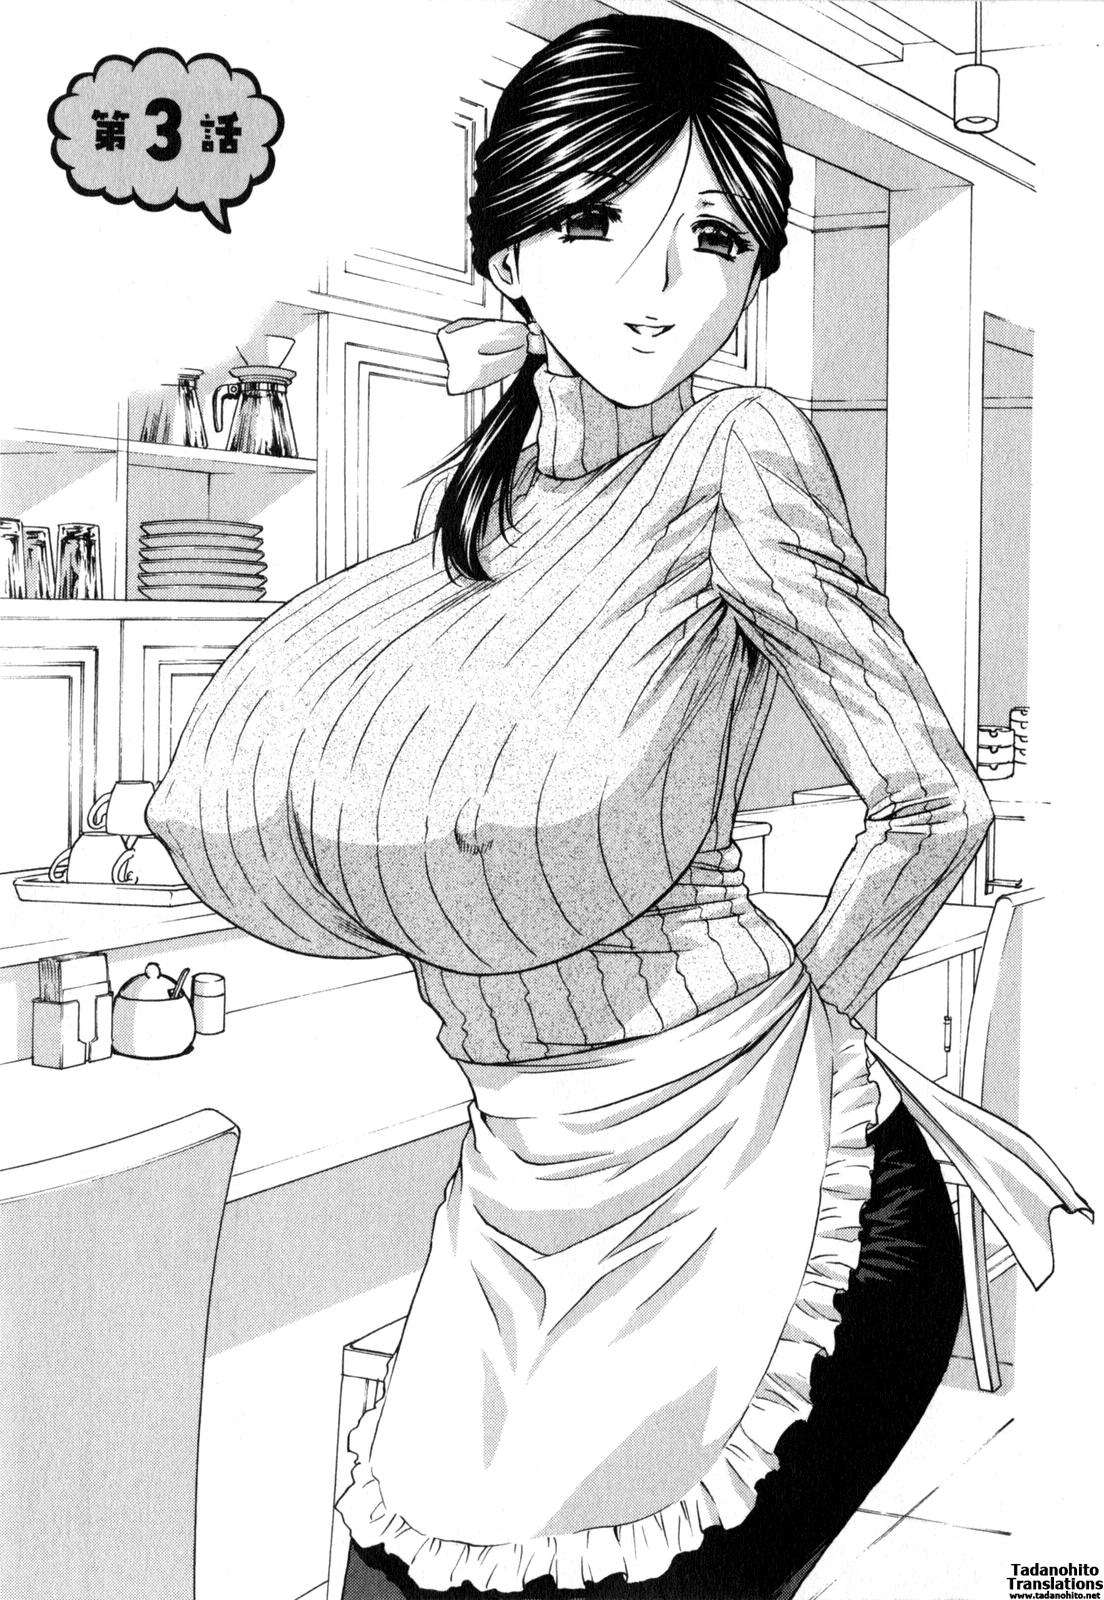 [Hidemaru] Life with Married Women Just Like a Manga 2 - Ch. 1-6 [English] {Tadanohito} 46